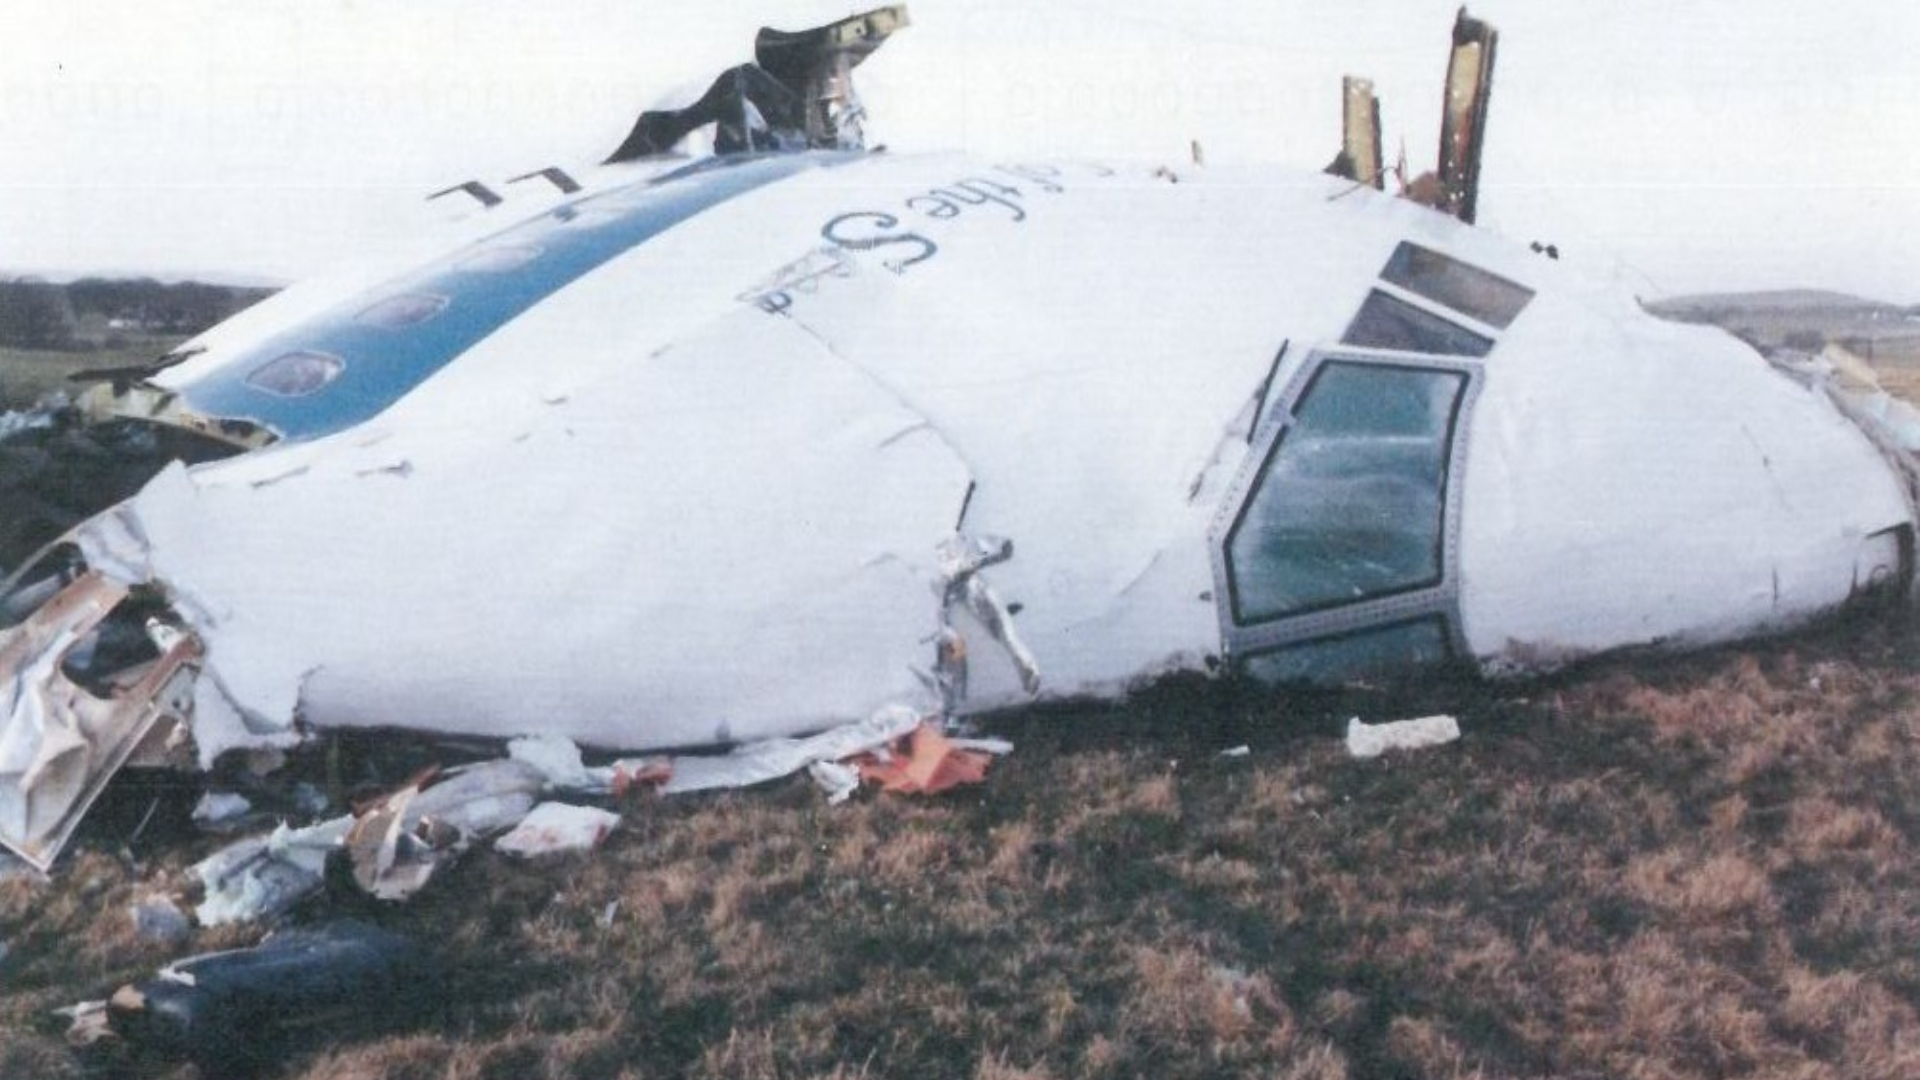 Nose and flight deck of Pan Am flight 103 destroyed above Lockerbie on 21 December, 1988.